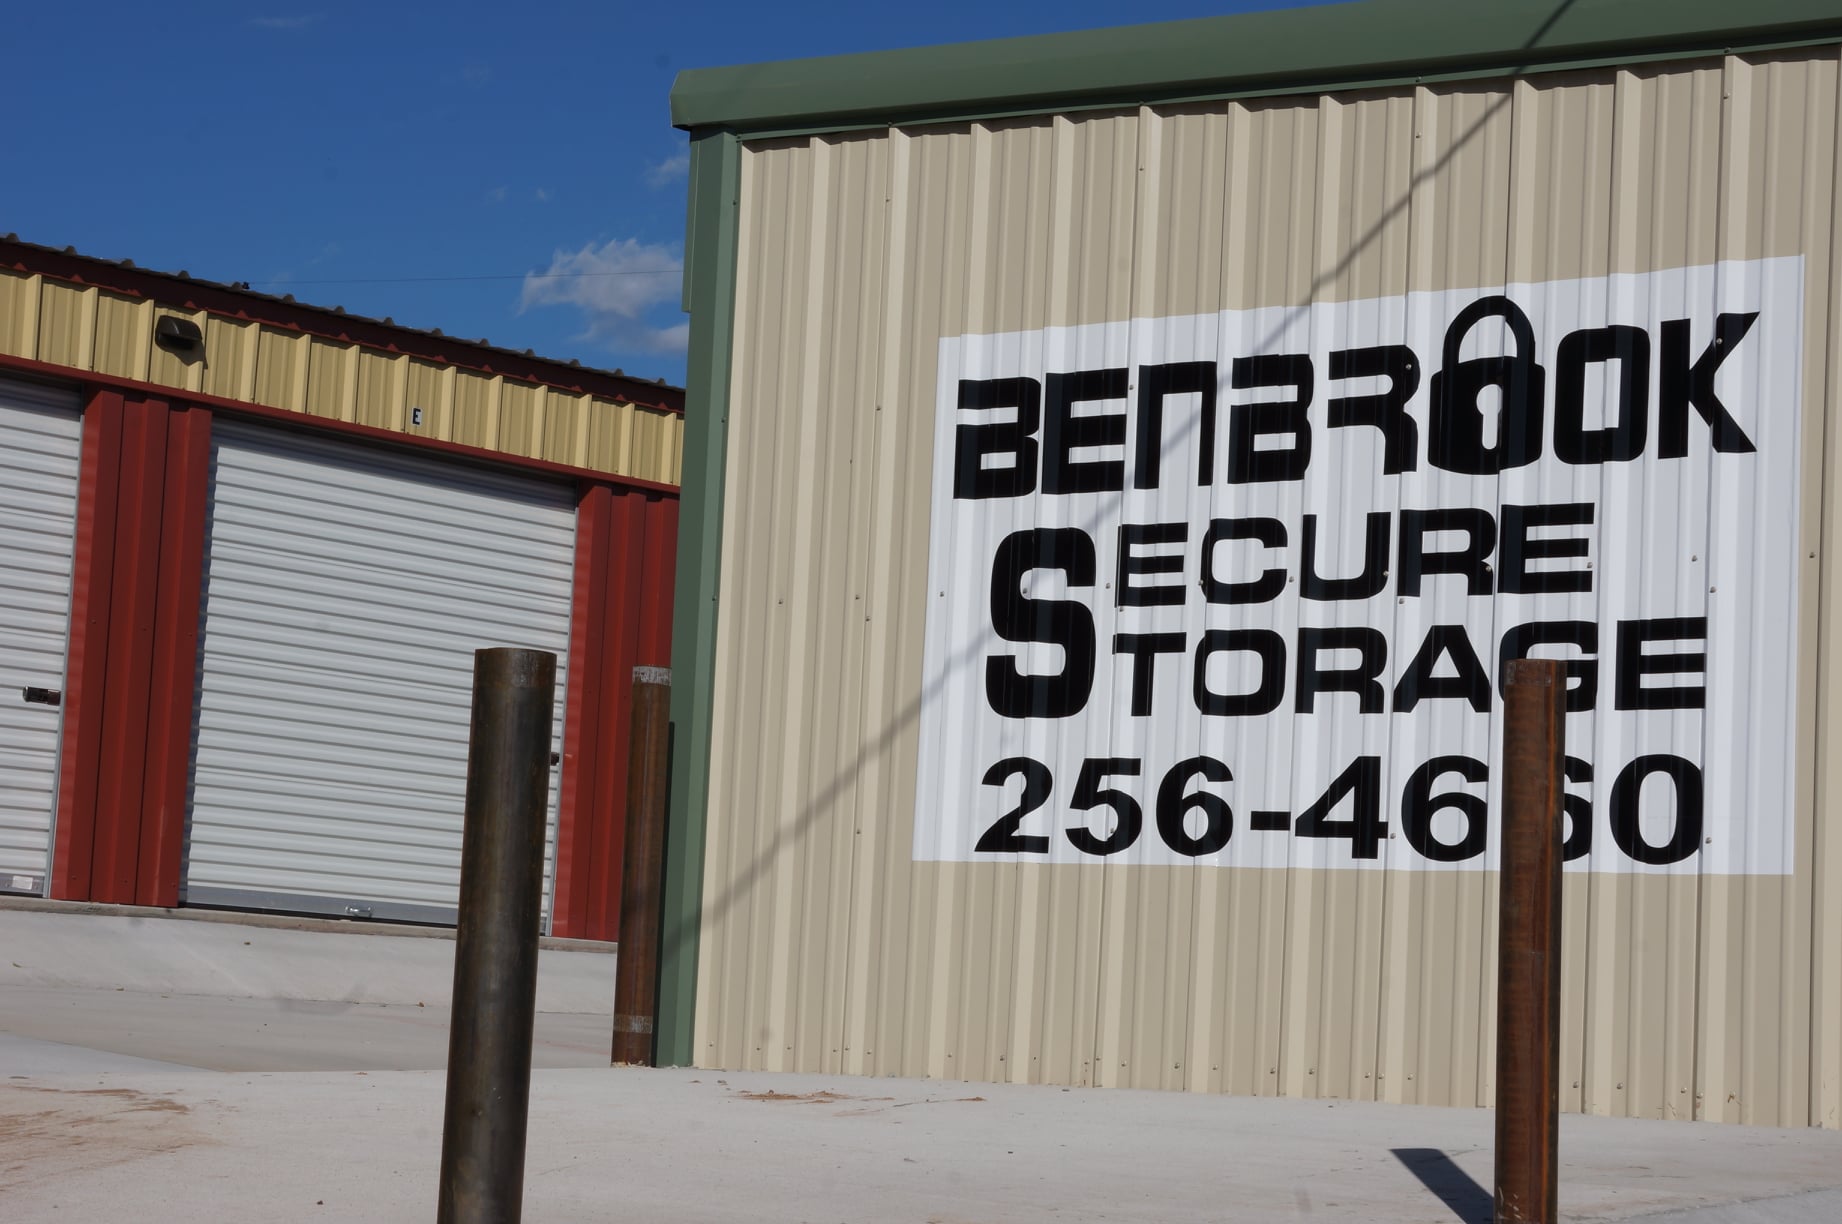 Benbrook Secure Storage